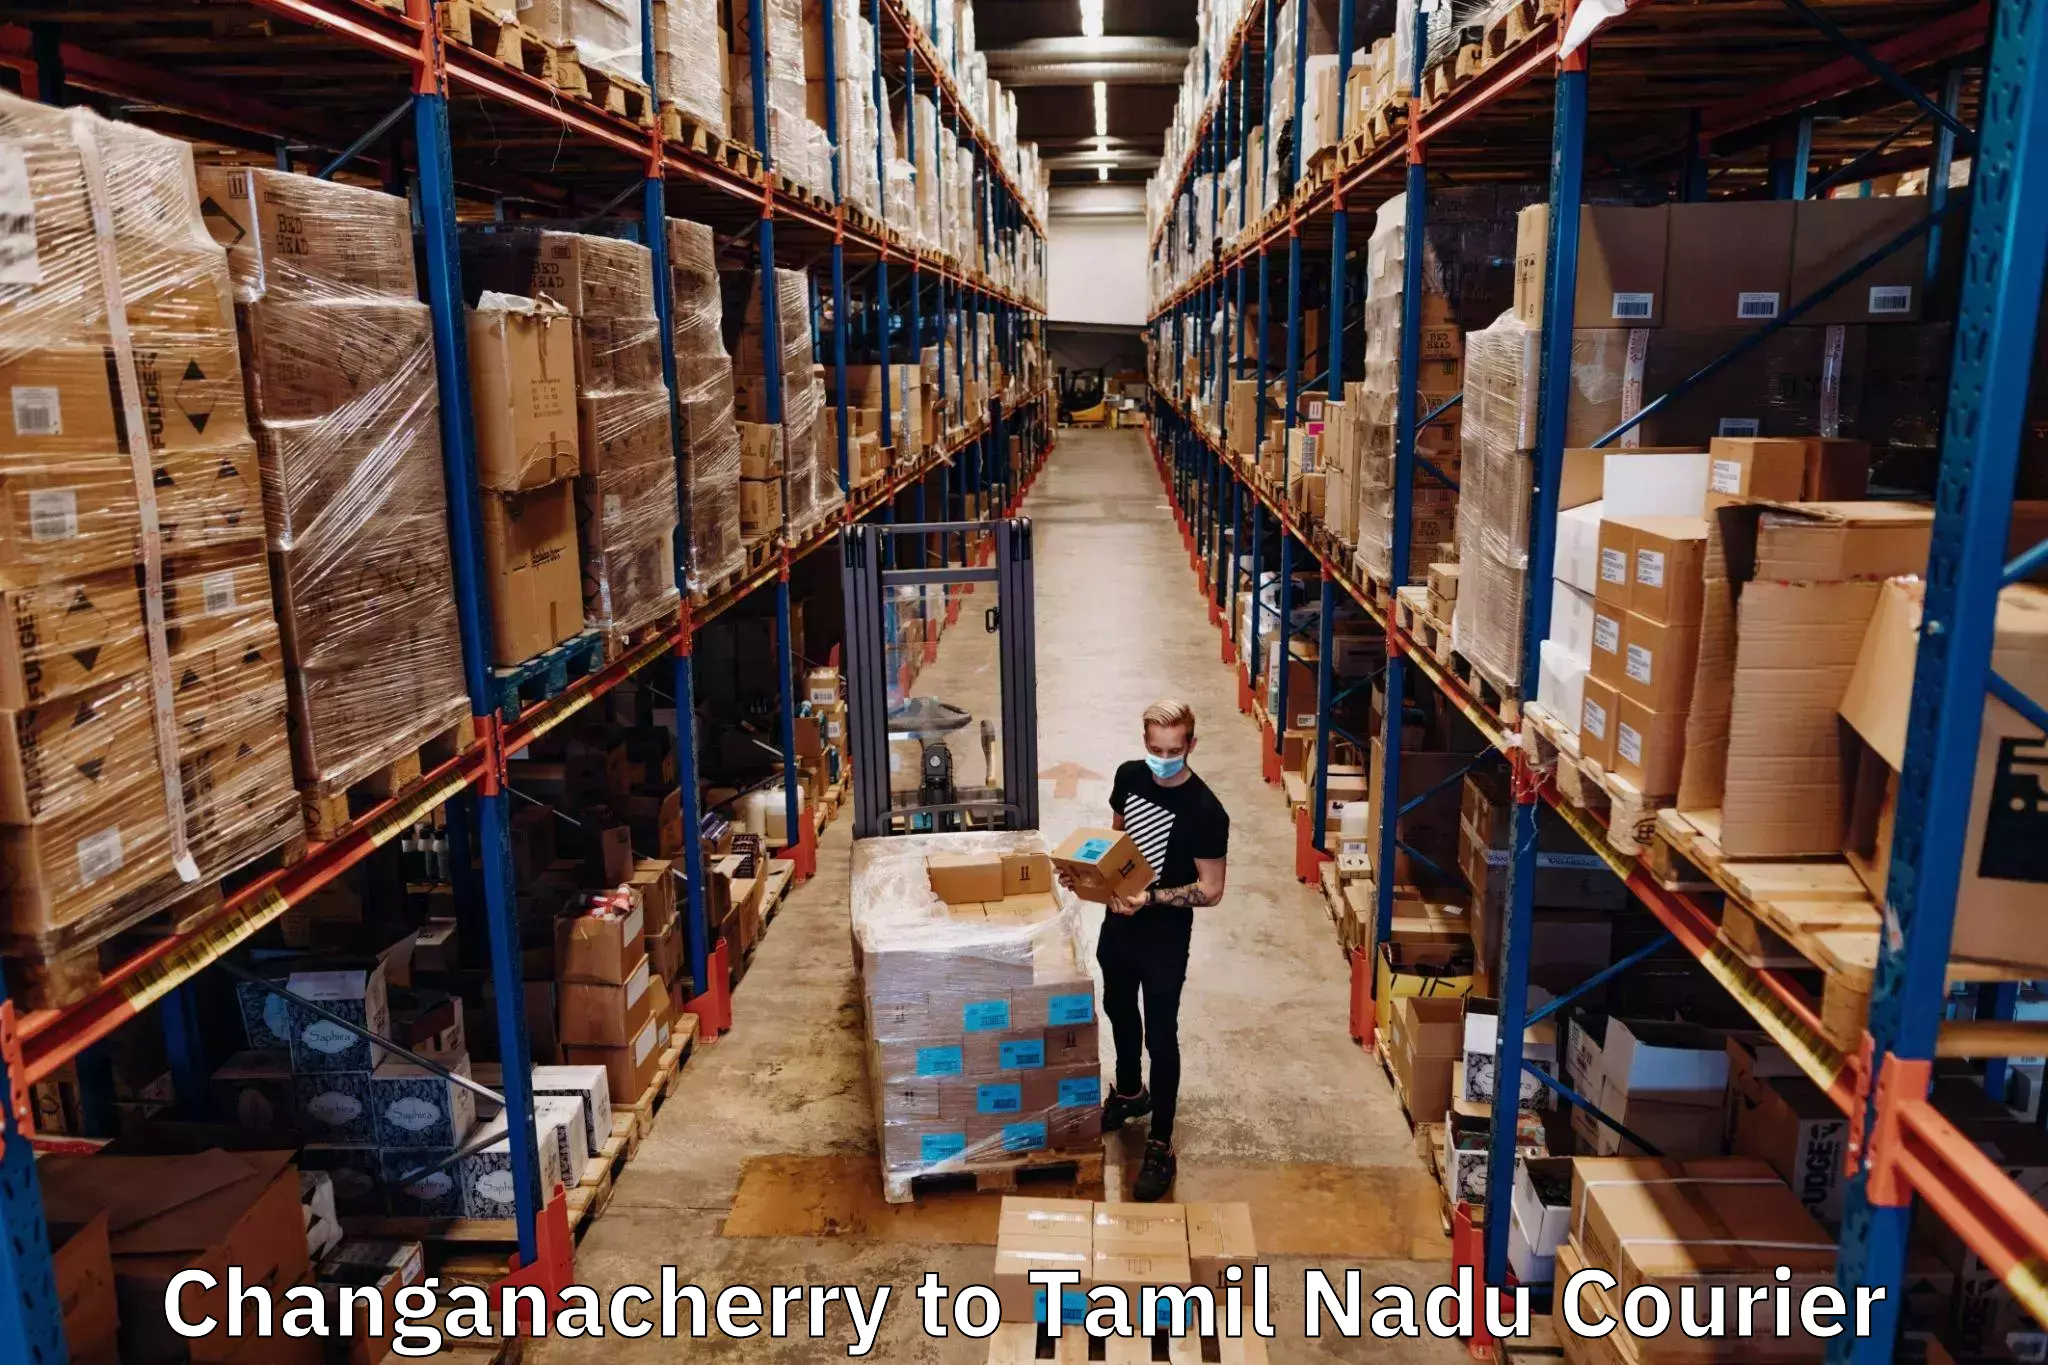 Reliable shipping partners Changanacherry to Sivaganga